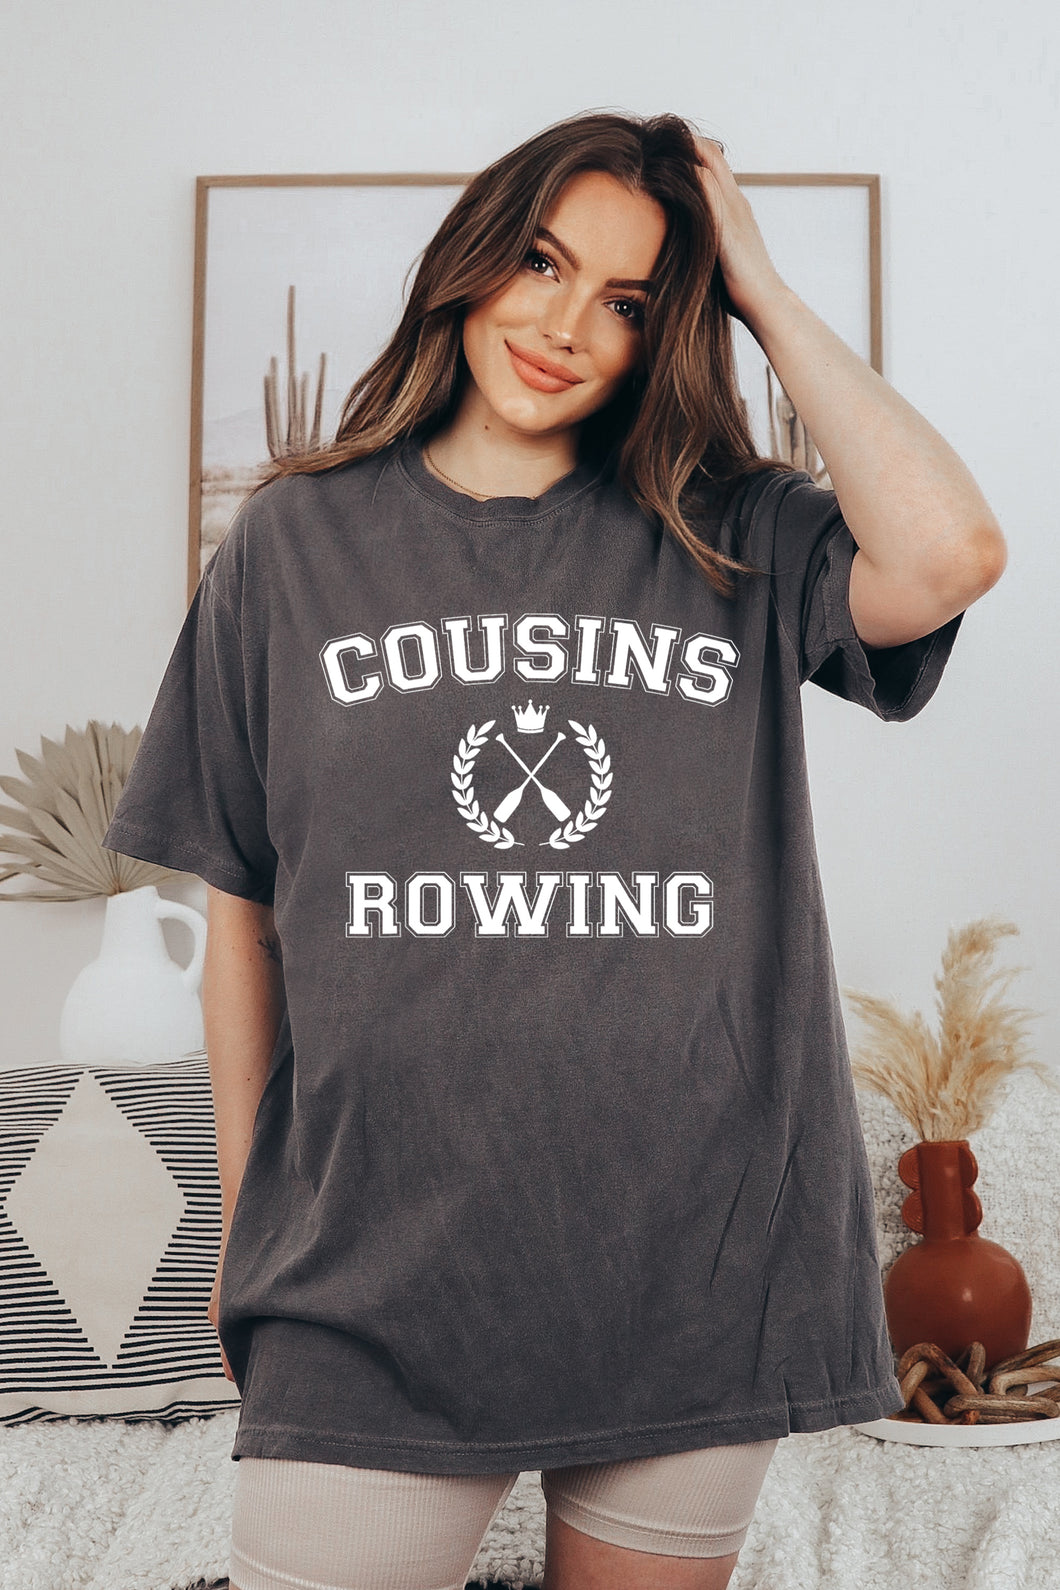 Cousins Rowing Shirt or Crewneck